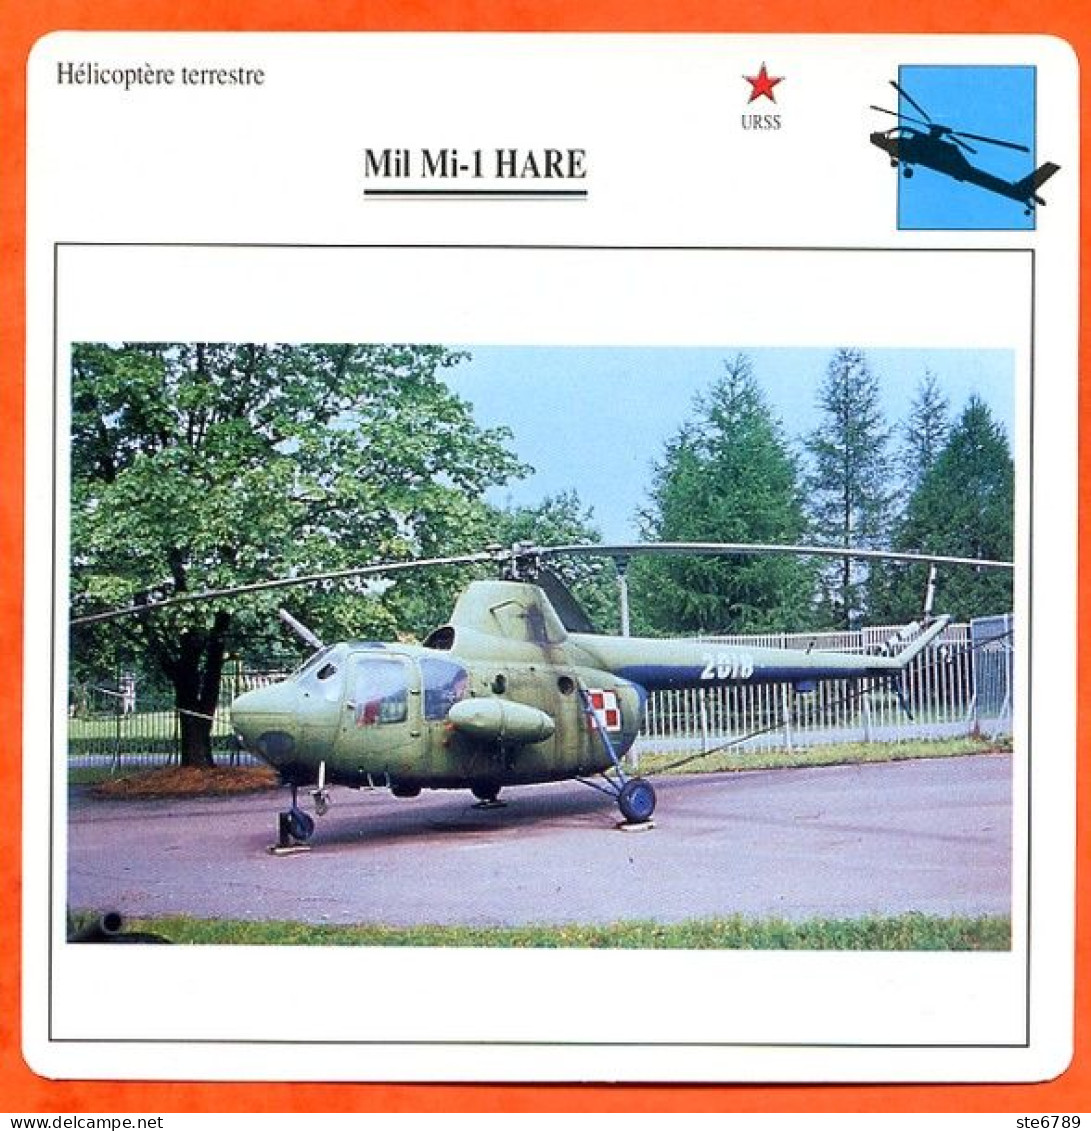 Fiche Aviation Mil Mi 1 HARE / Hélicoptère Terrestre URSS Avions - Avions